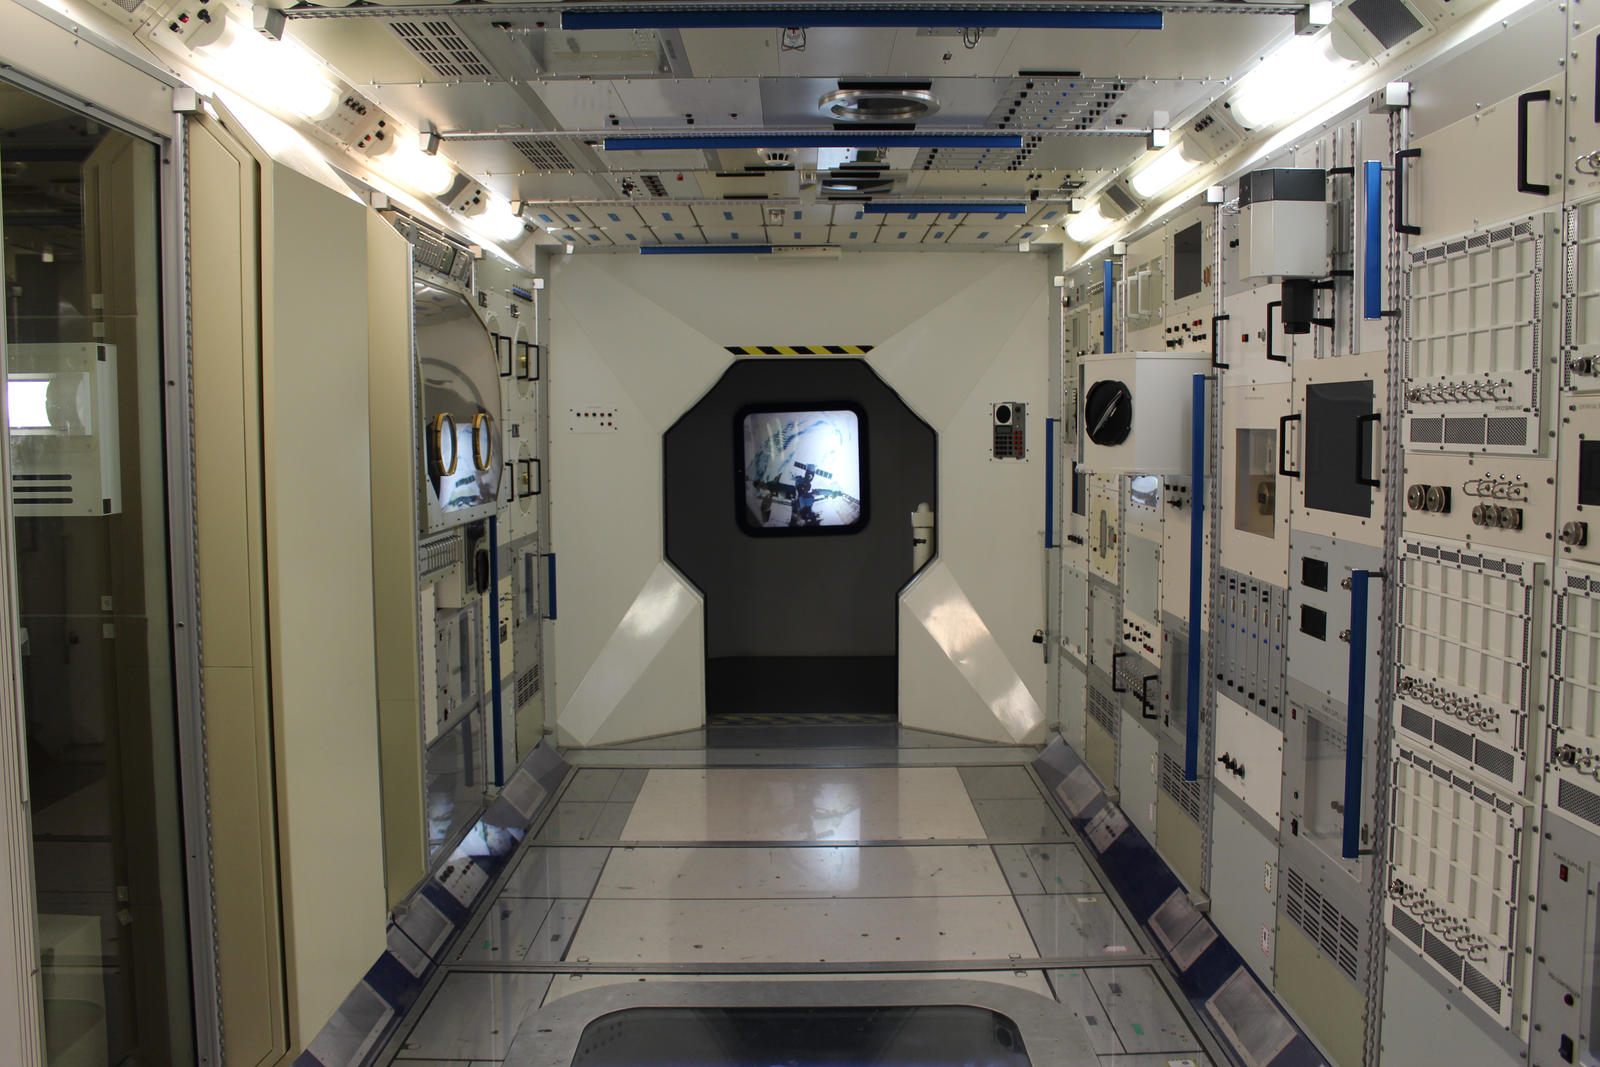 Space Station Interior 1 By Fuguestock On Deviantart